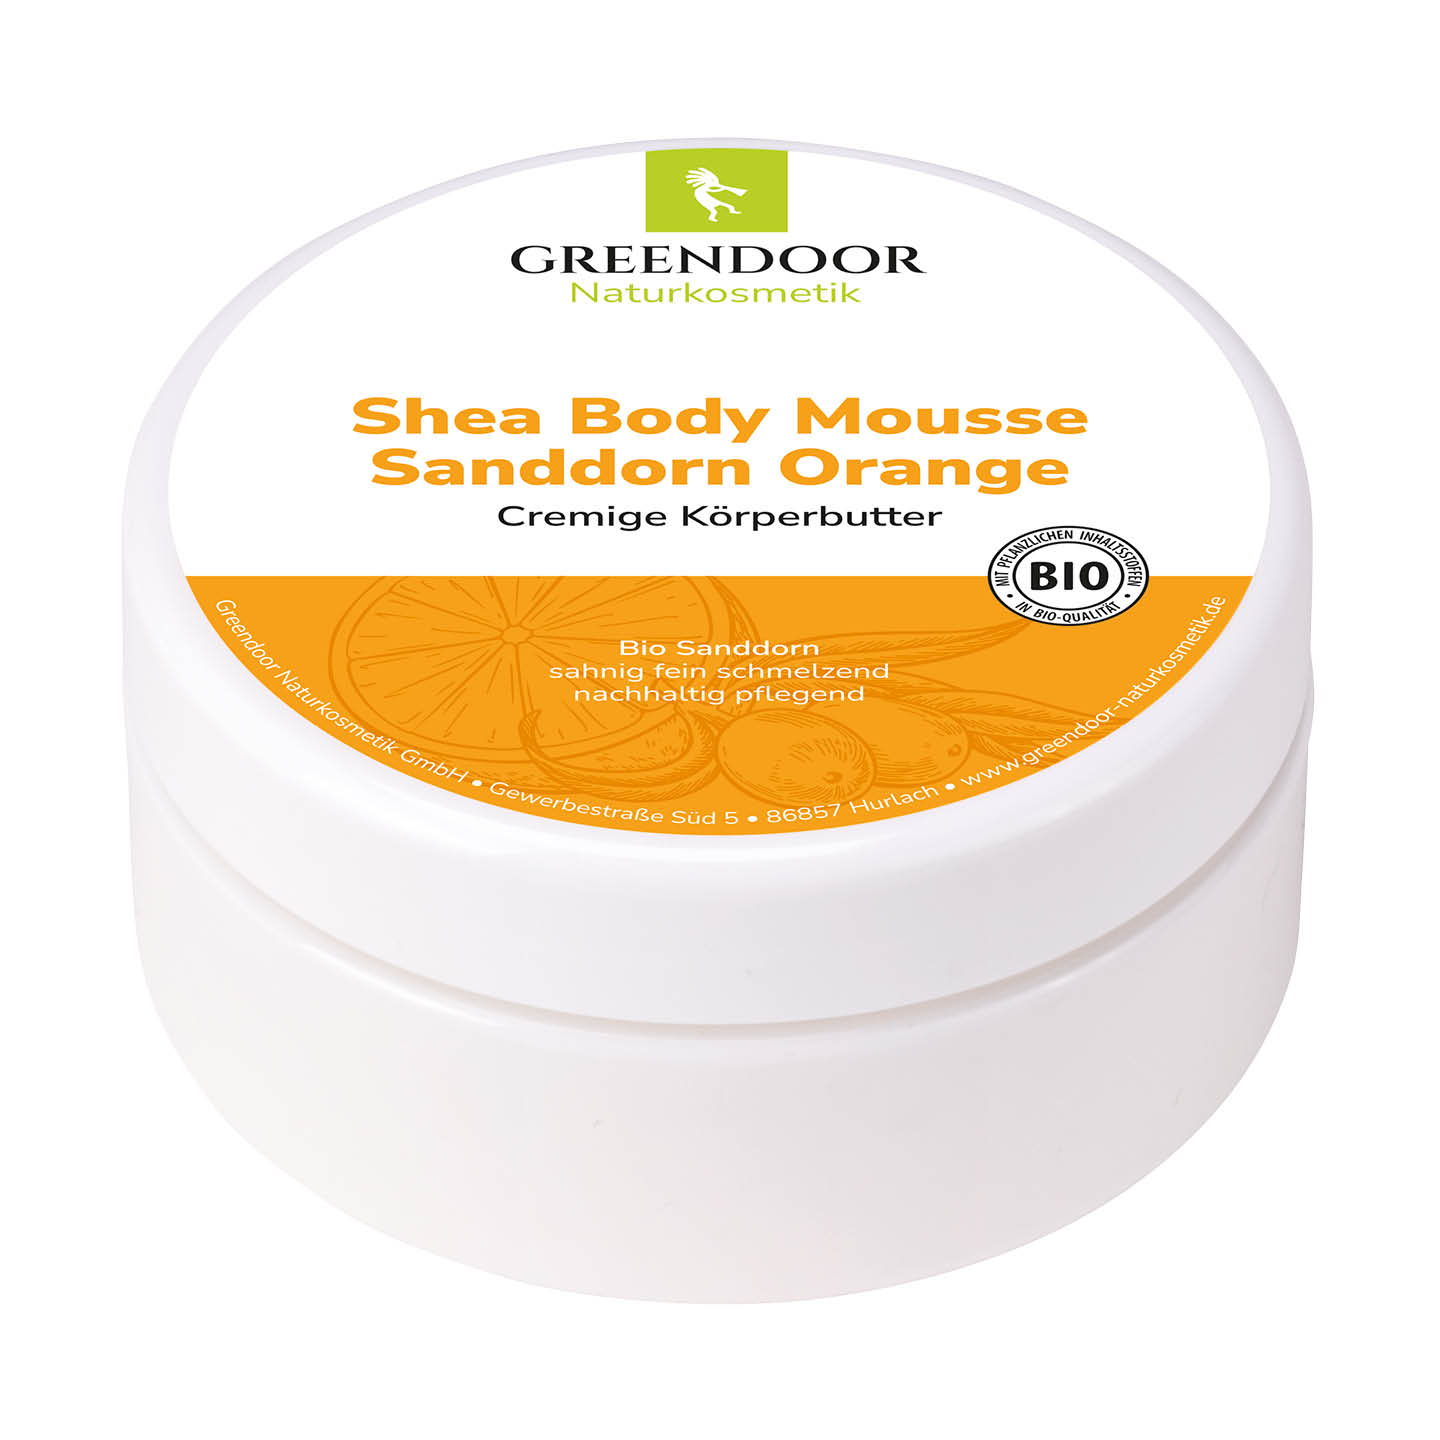 Shea Body Mousse Sanddorn Orange 200ml, vegane Körperbutter, reine Natur, wasserfrei